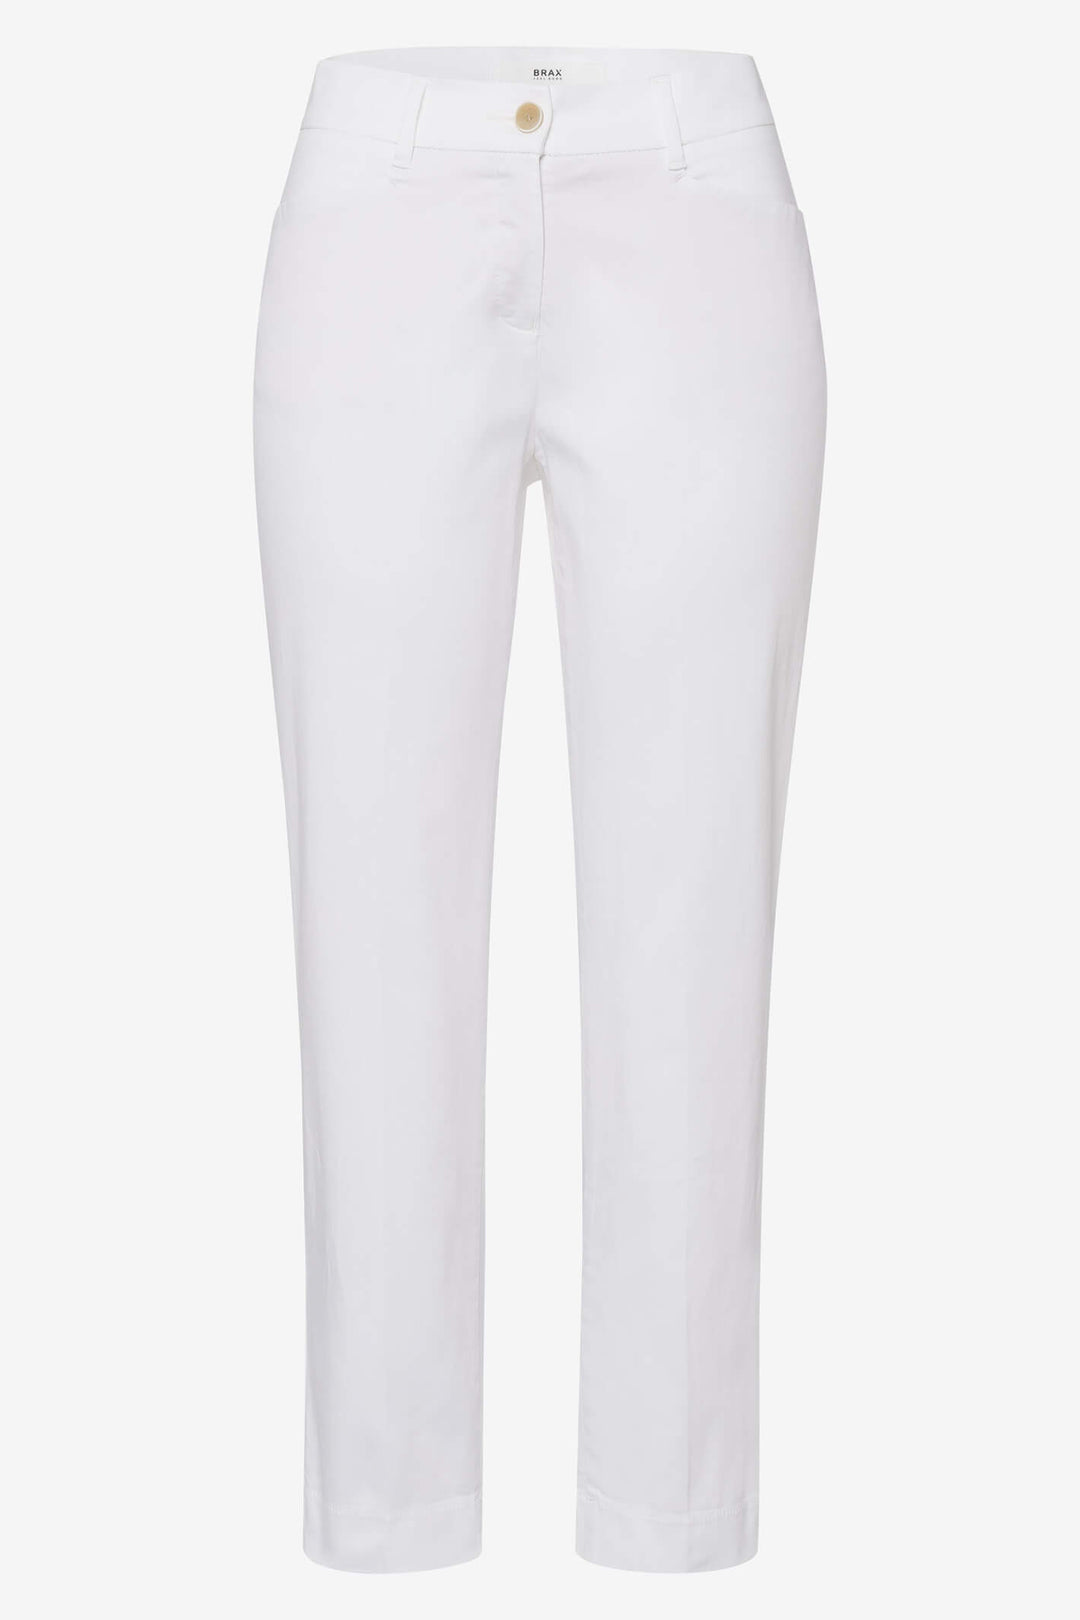 Brax Mara S 72-1458-99 White Trousers - Oloivia Grace Fashion